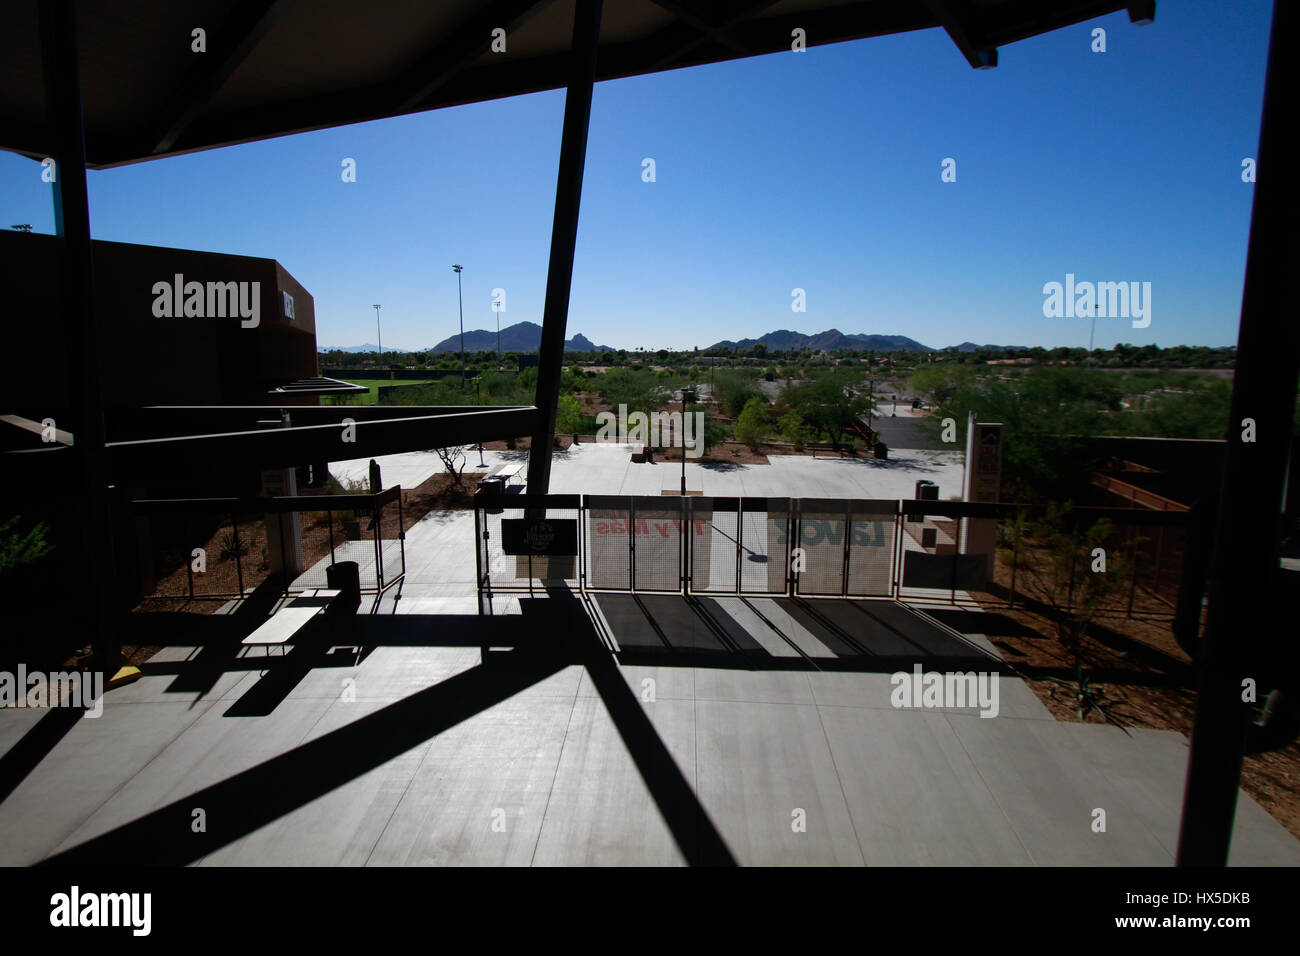 Table, Diamond or Major league baseball field during spring training in Scottsdale Arizona. Stock Photo